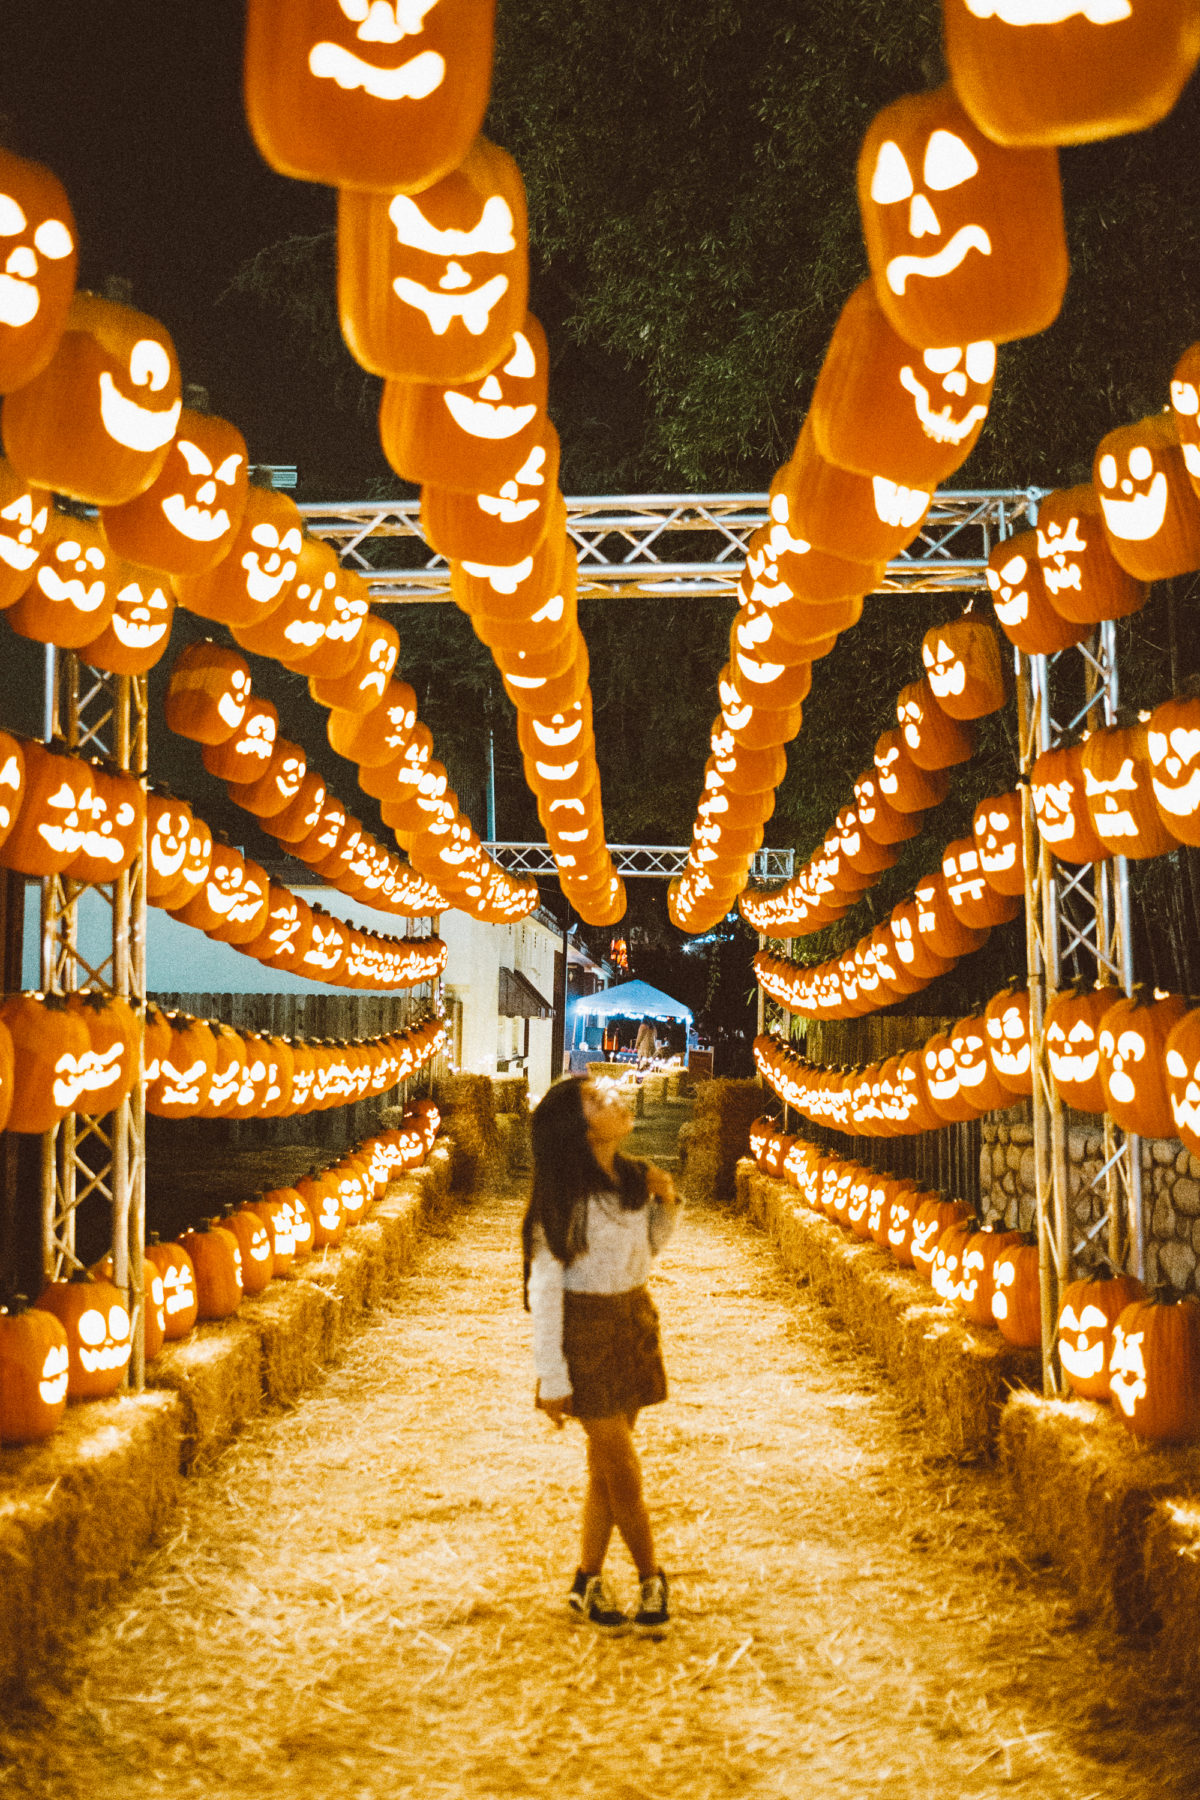 Pumpkin nights festival Halloween